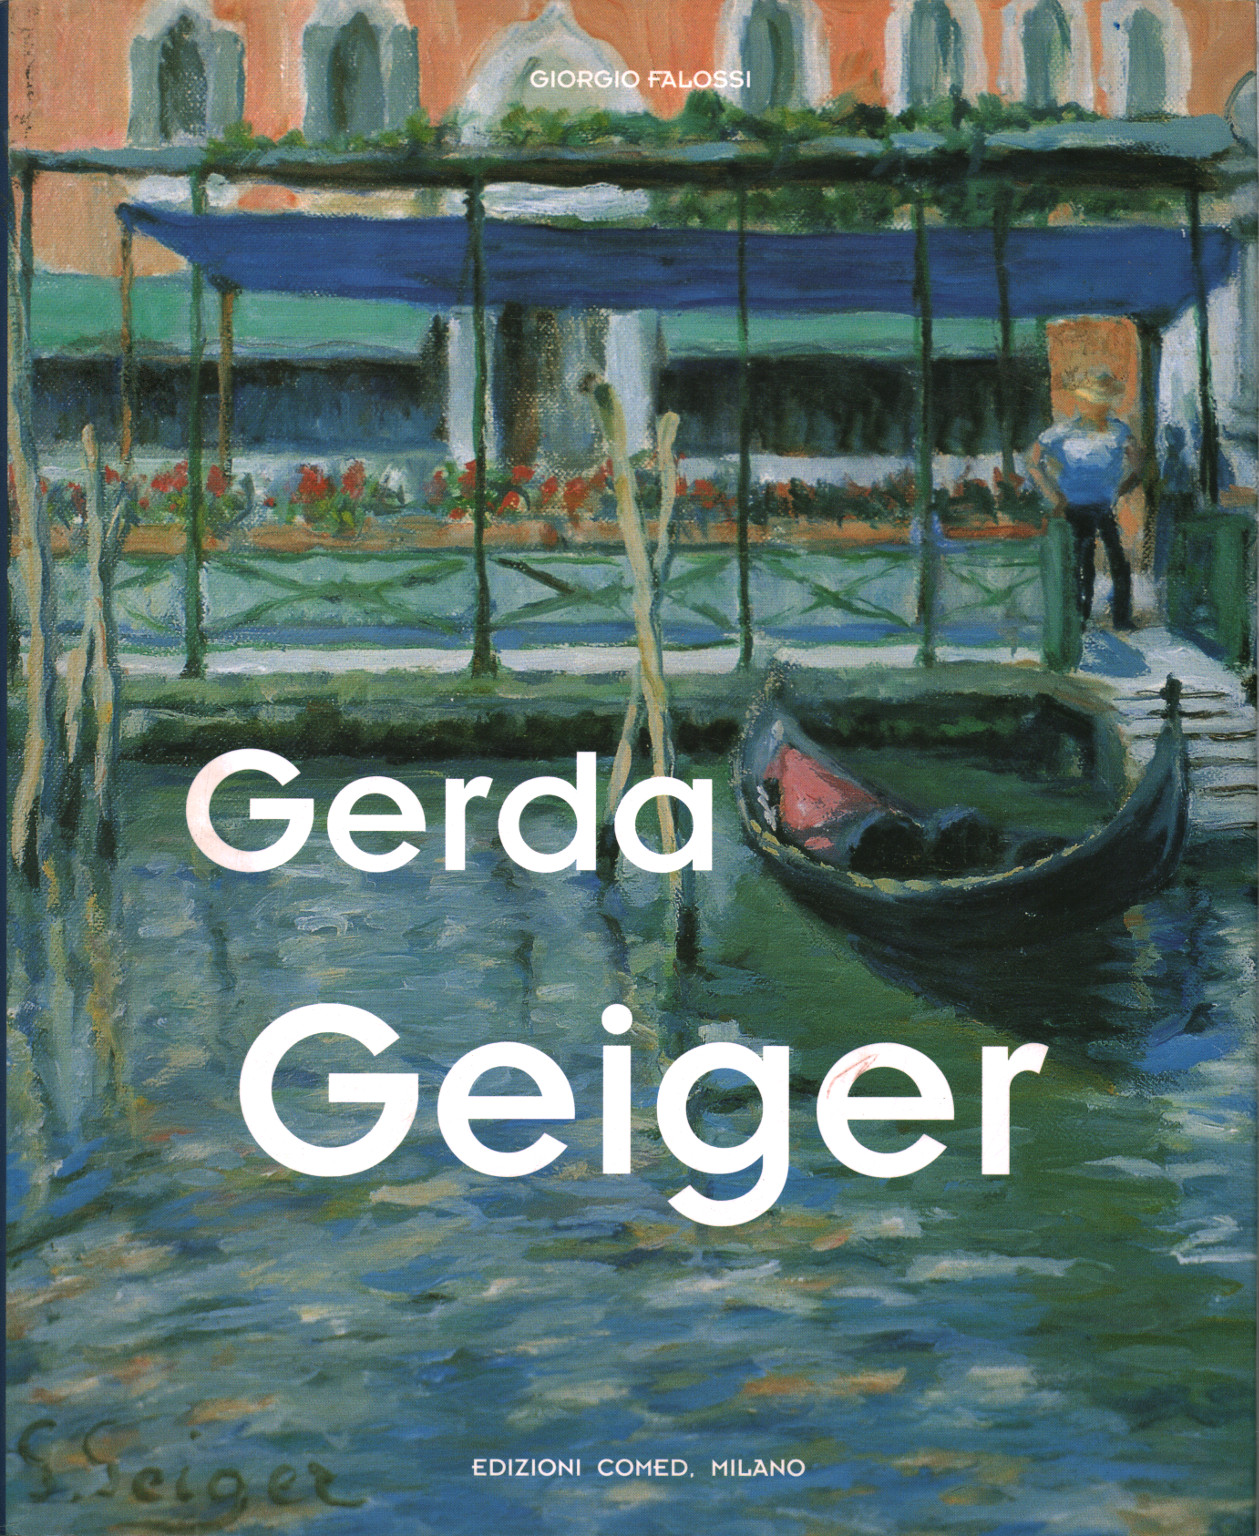 Gerda Geiger, s.una.